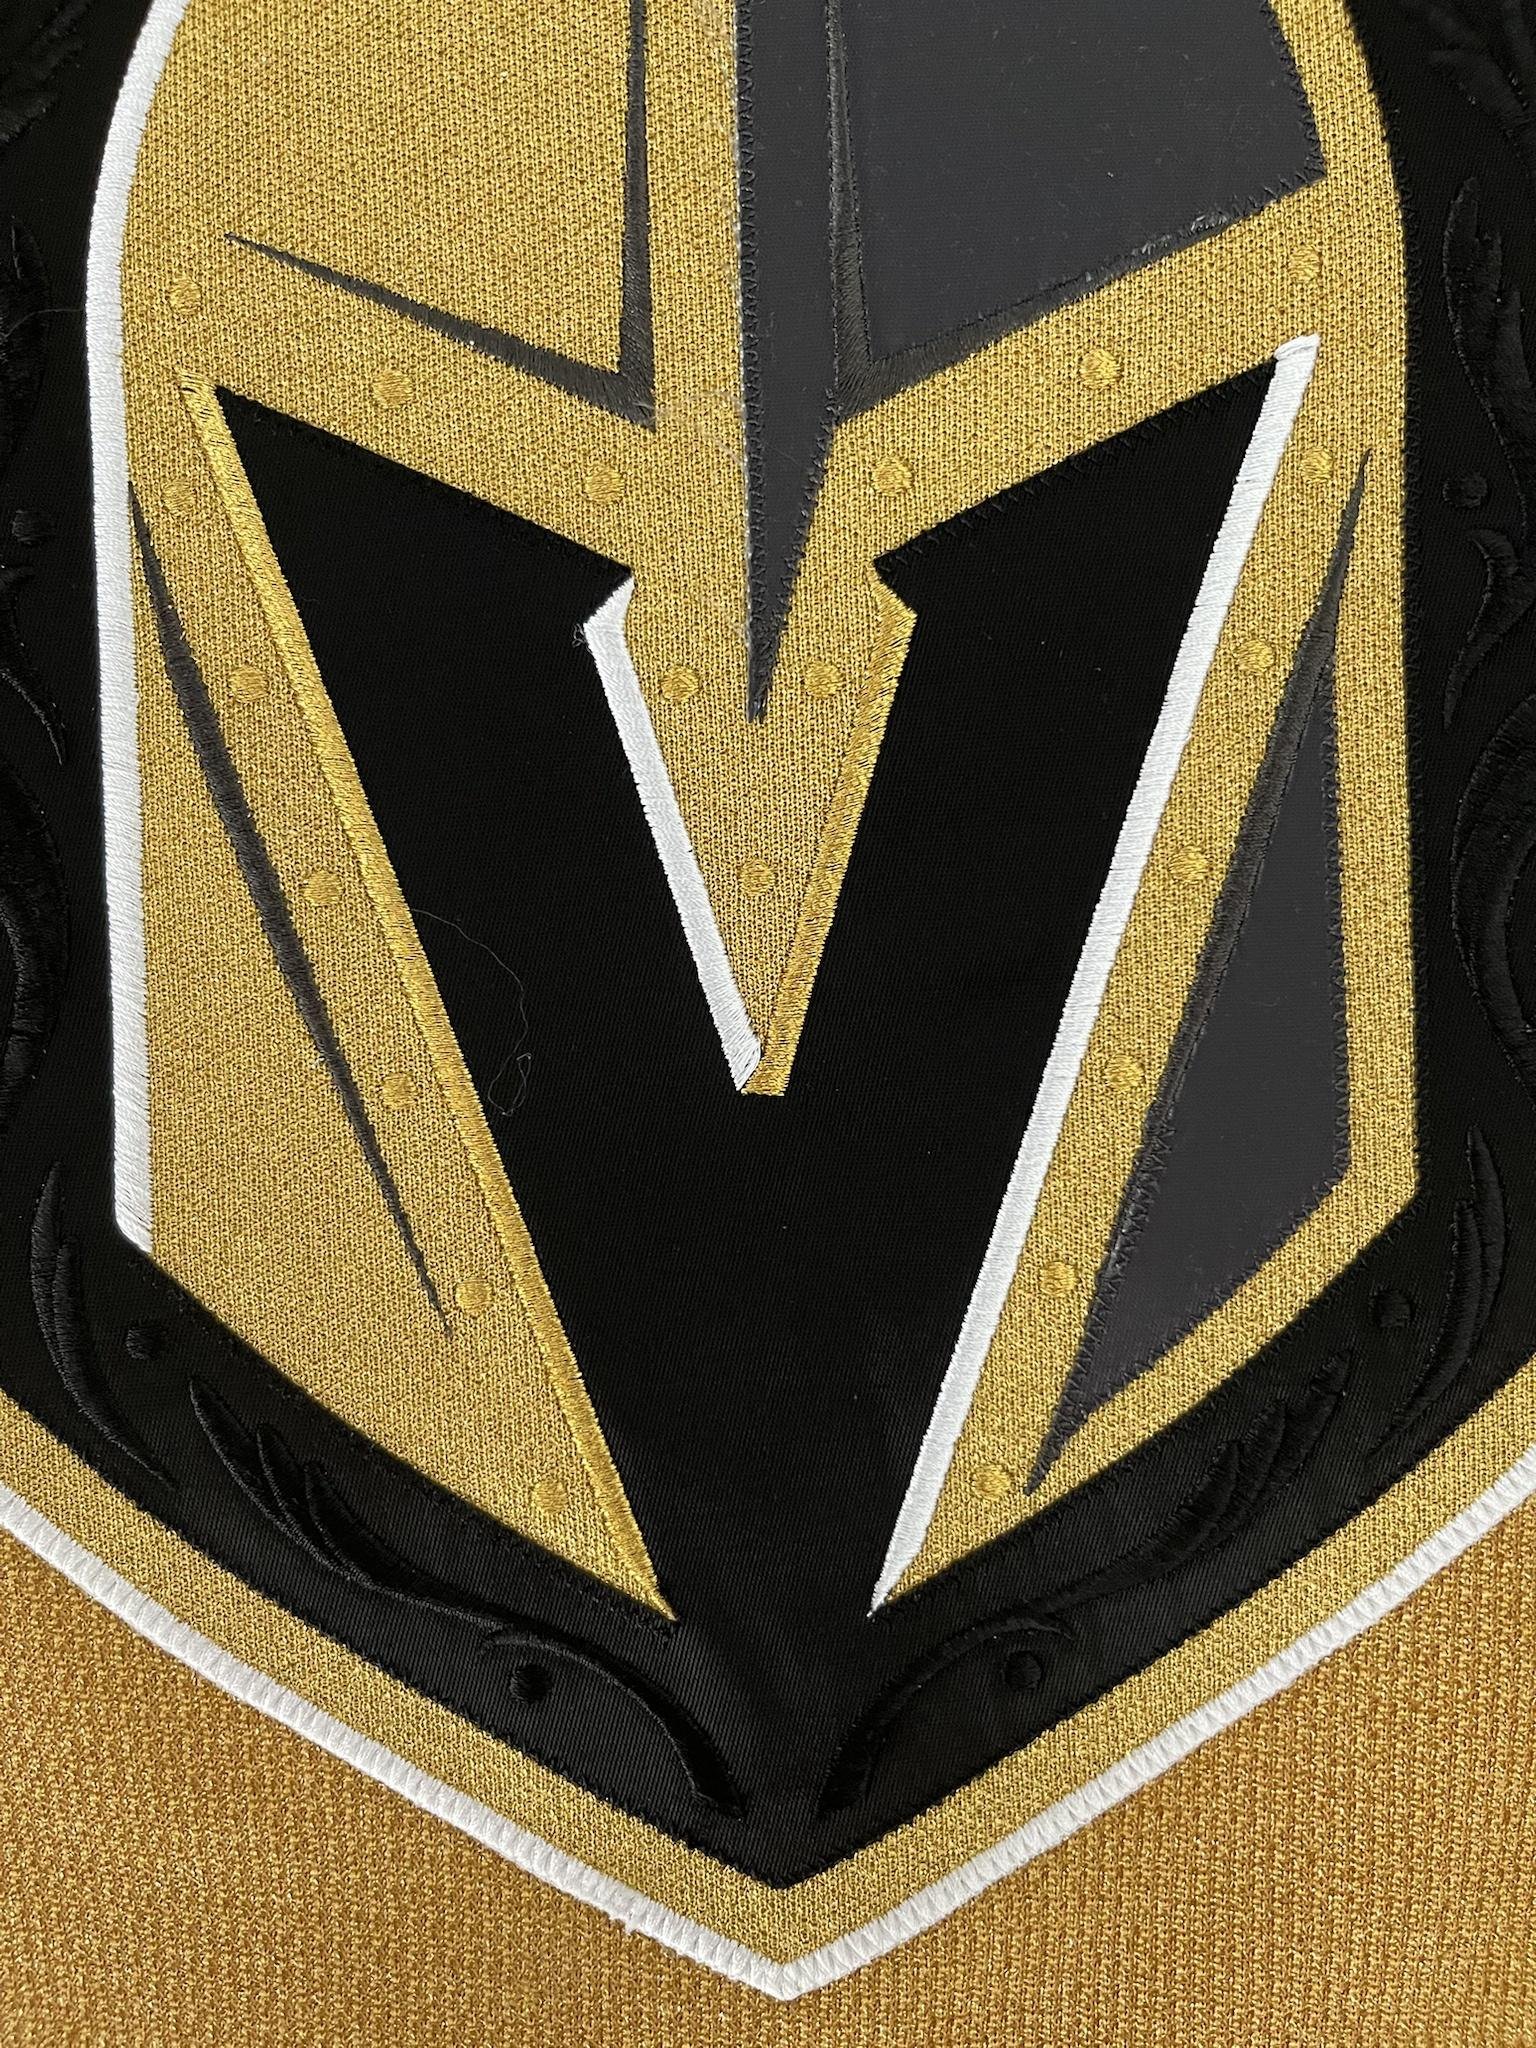 Shea Theodore 2020-2021 Vegas Golden Knights Alternate Set Game Worn Jersey  — Desert Hockey Threads